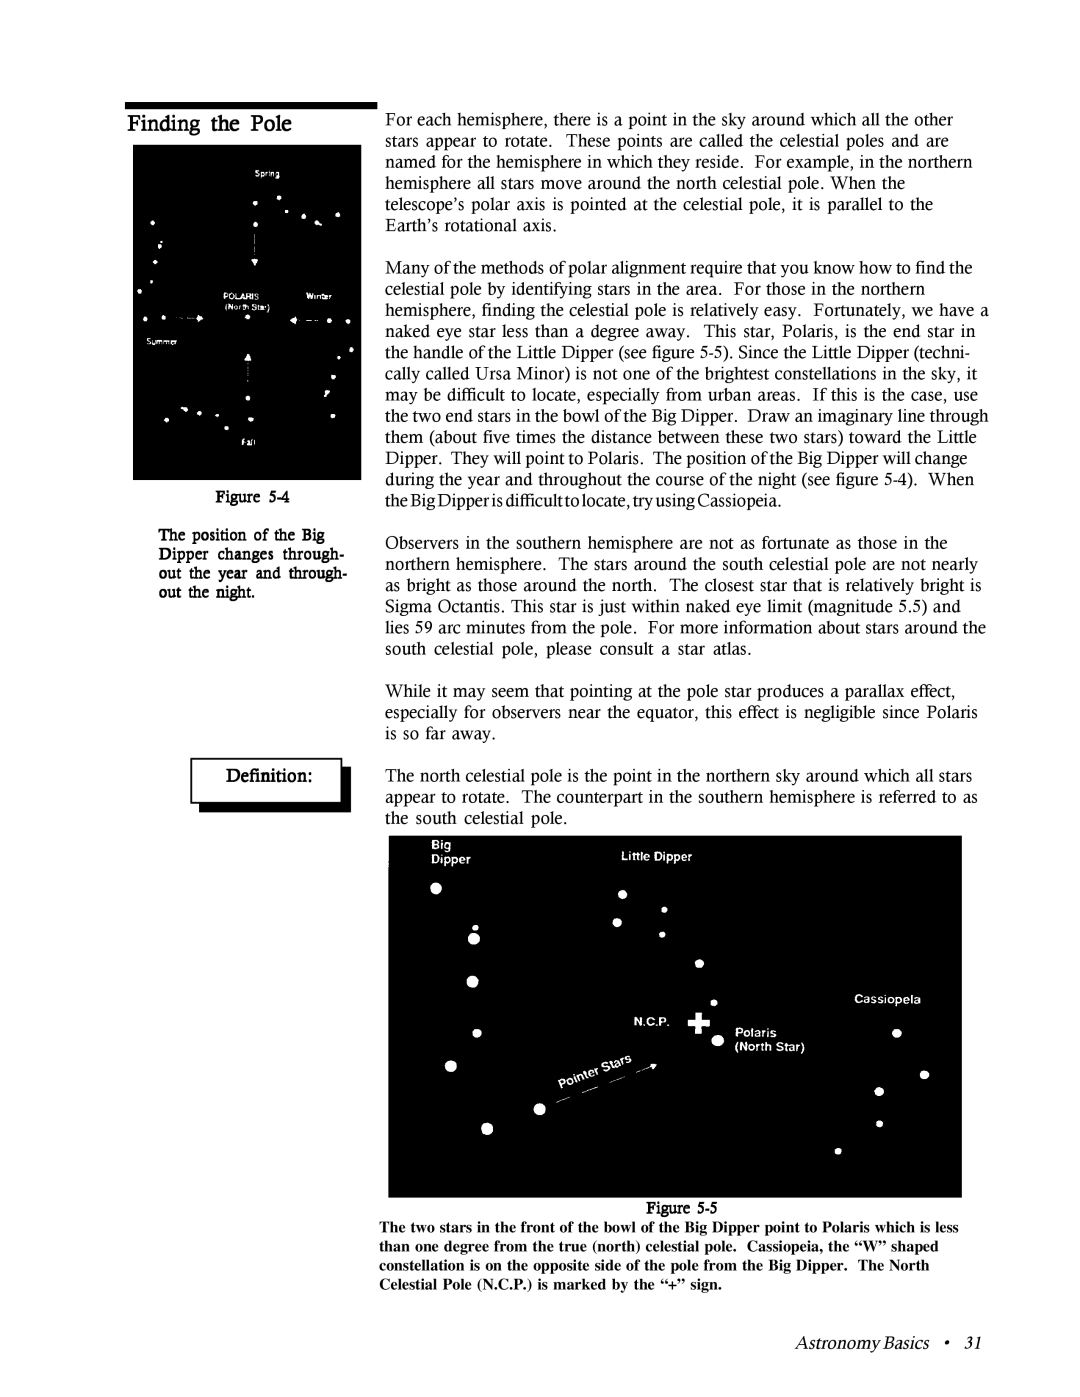 Celestron CR-150 HD instruction manual Finding the Pole, Definition, Astronomy Basics 